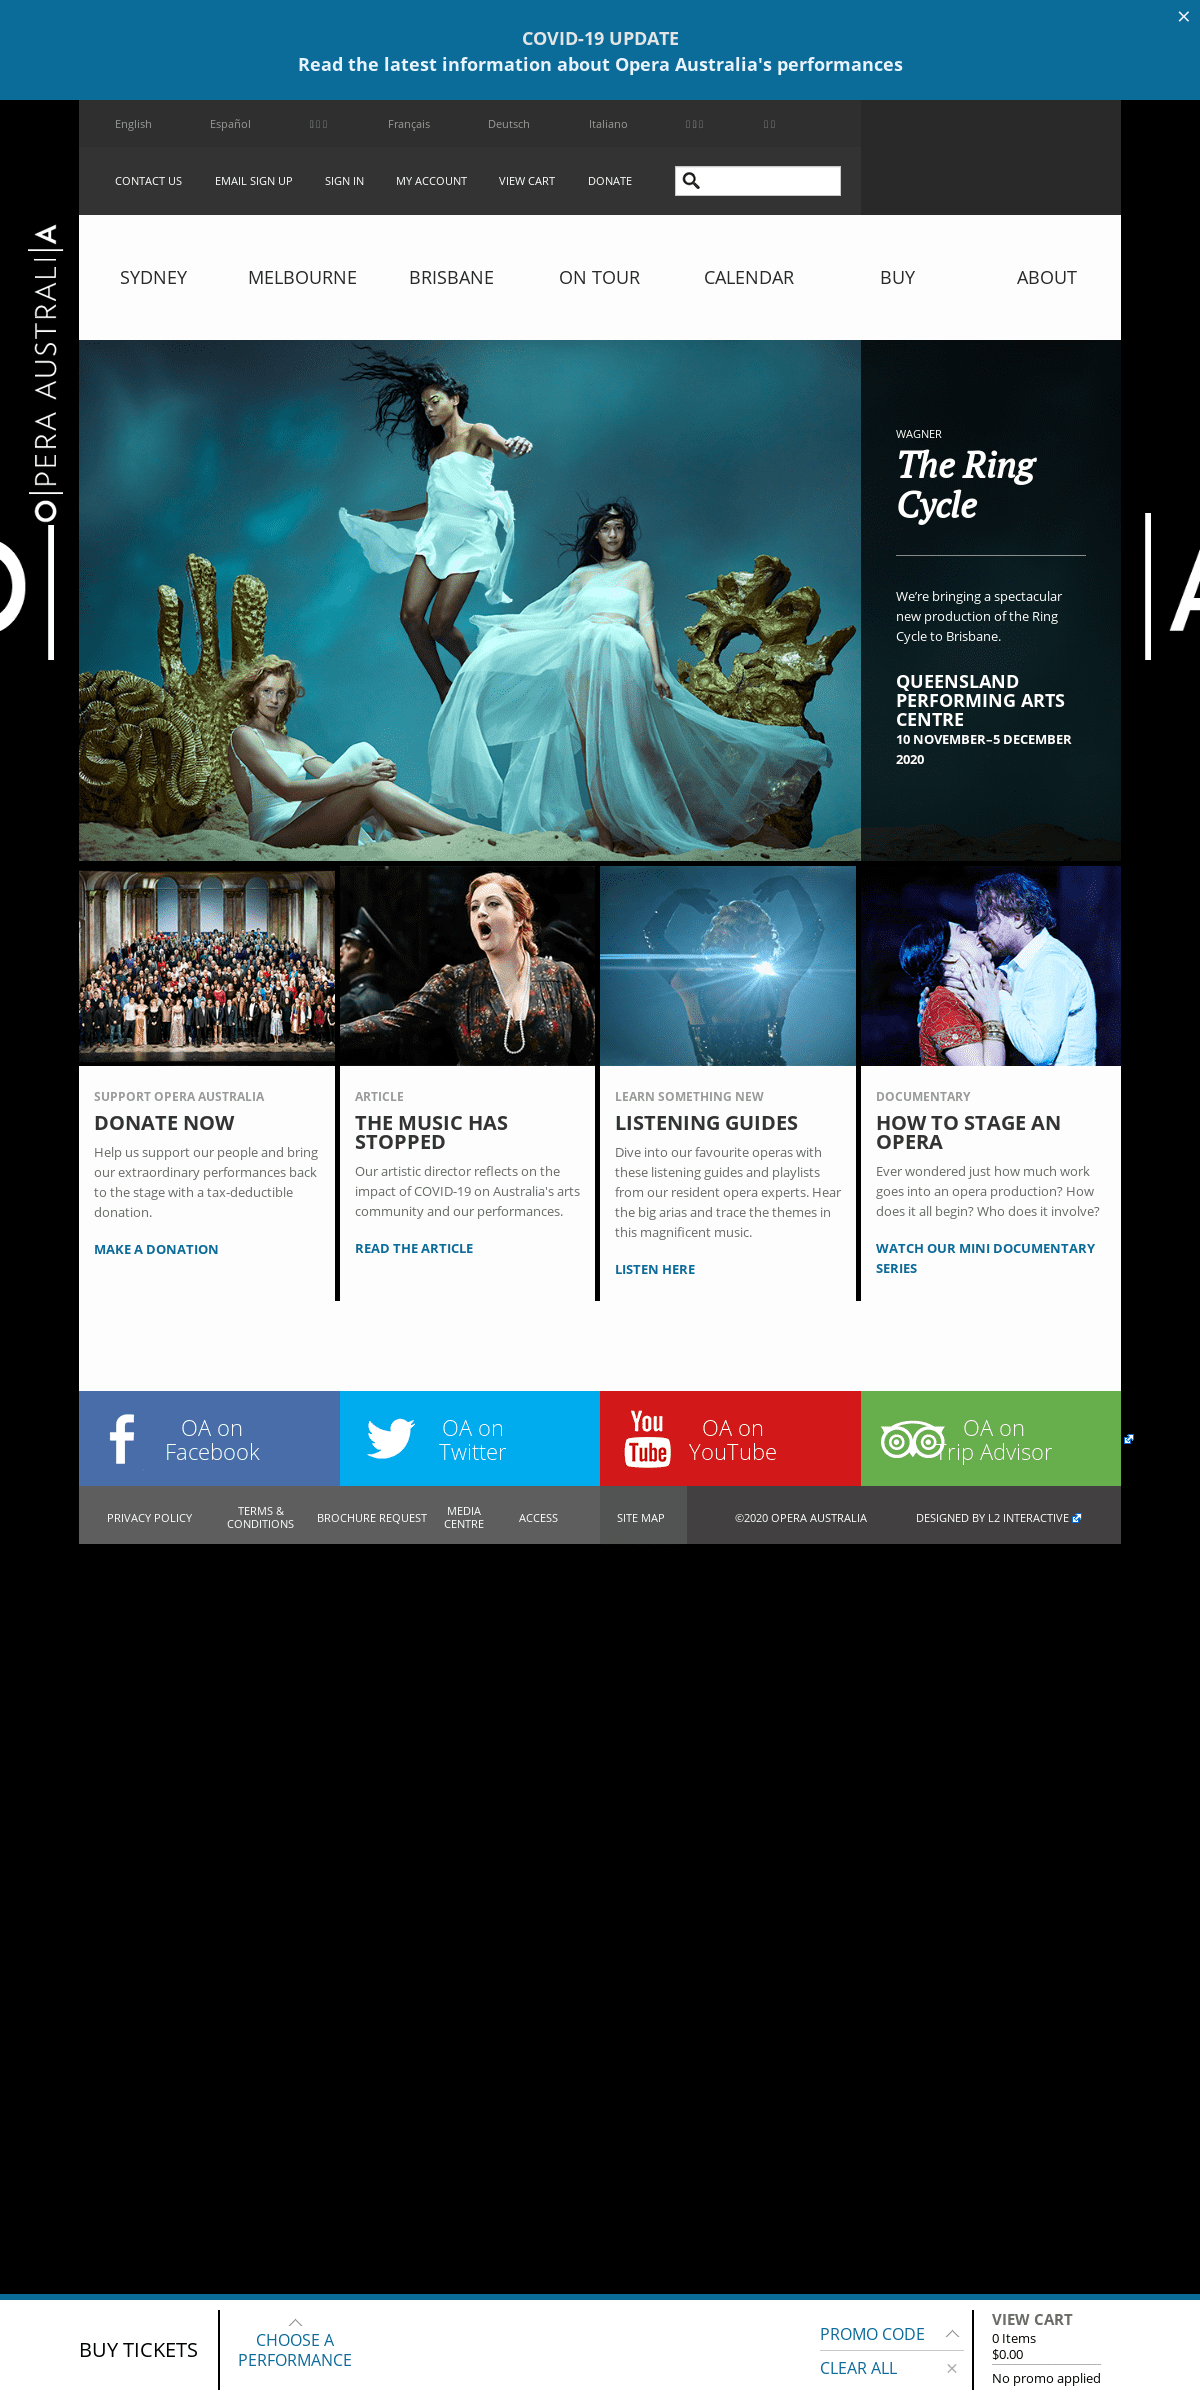 A complete backup of opera.org.au